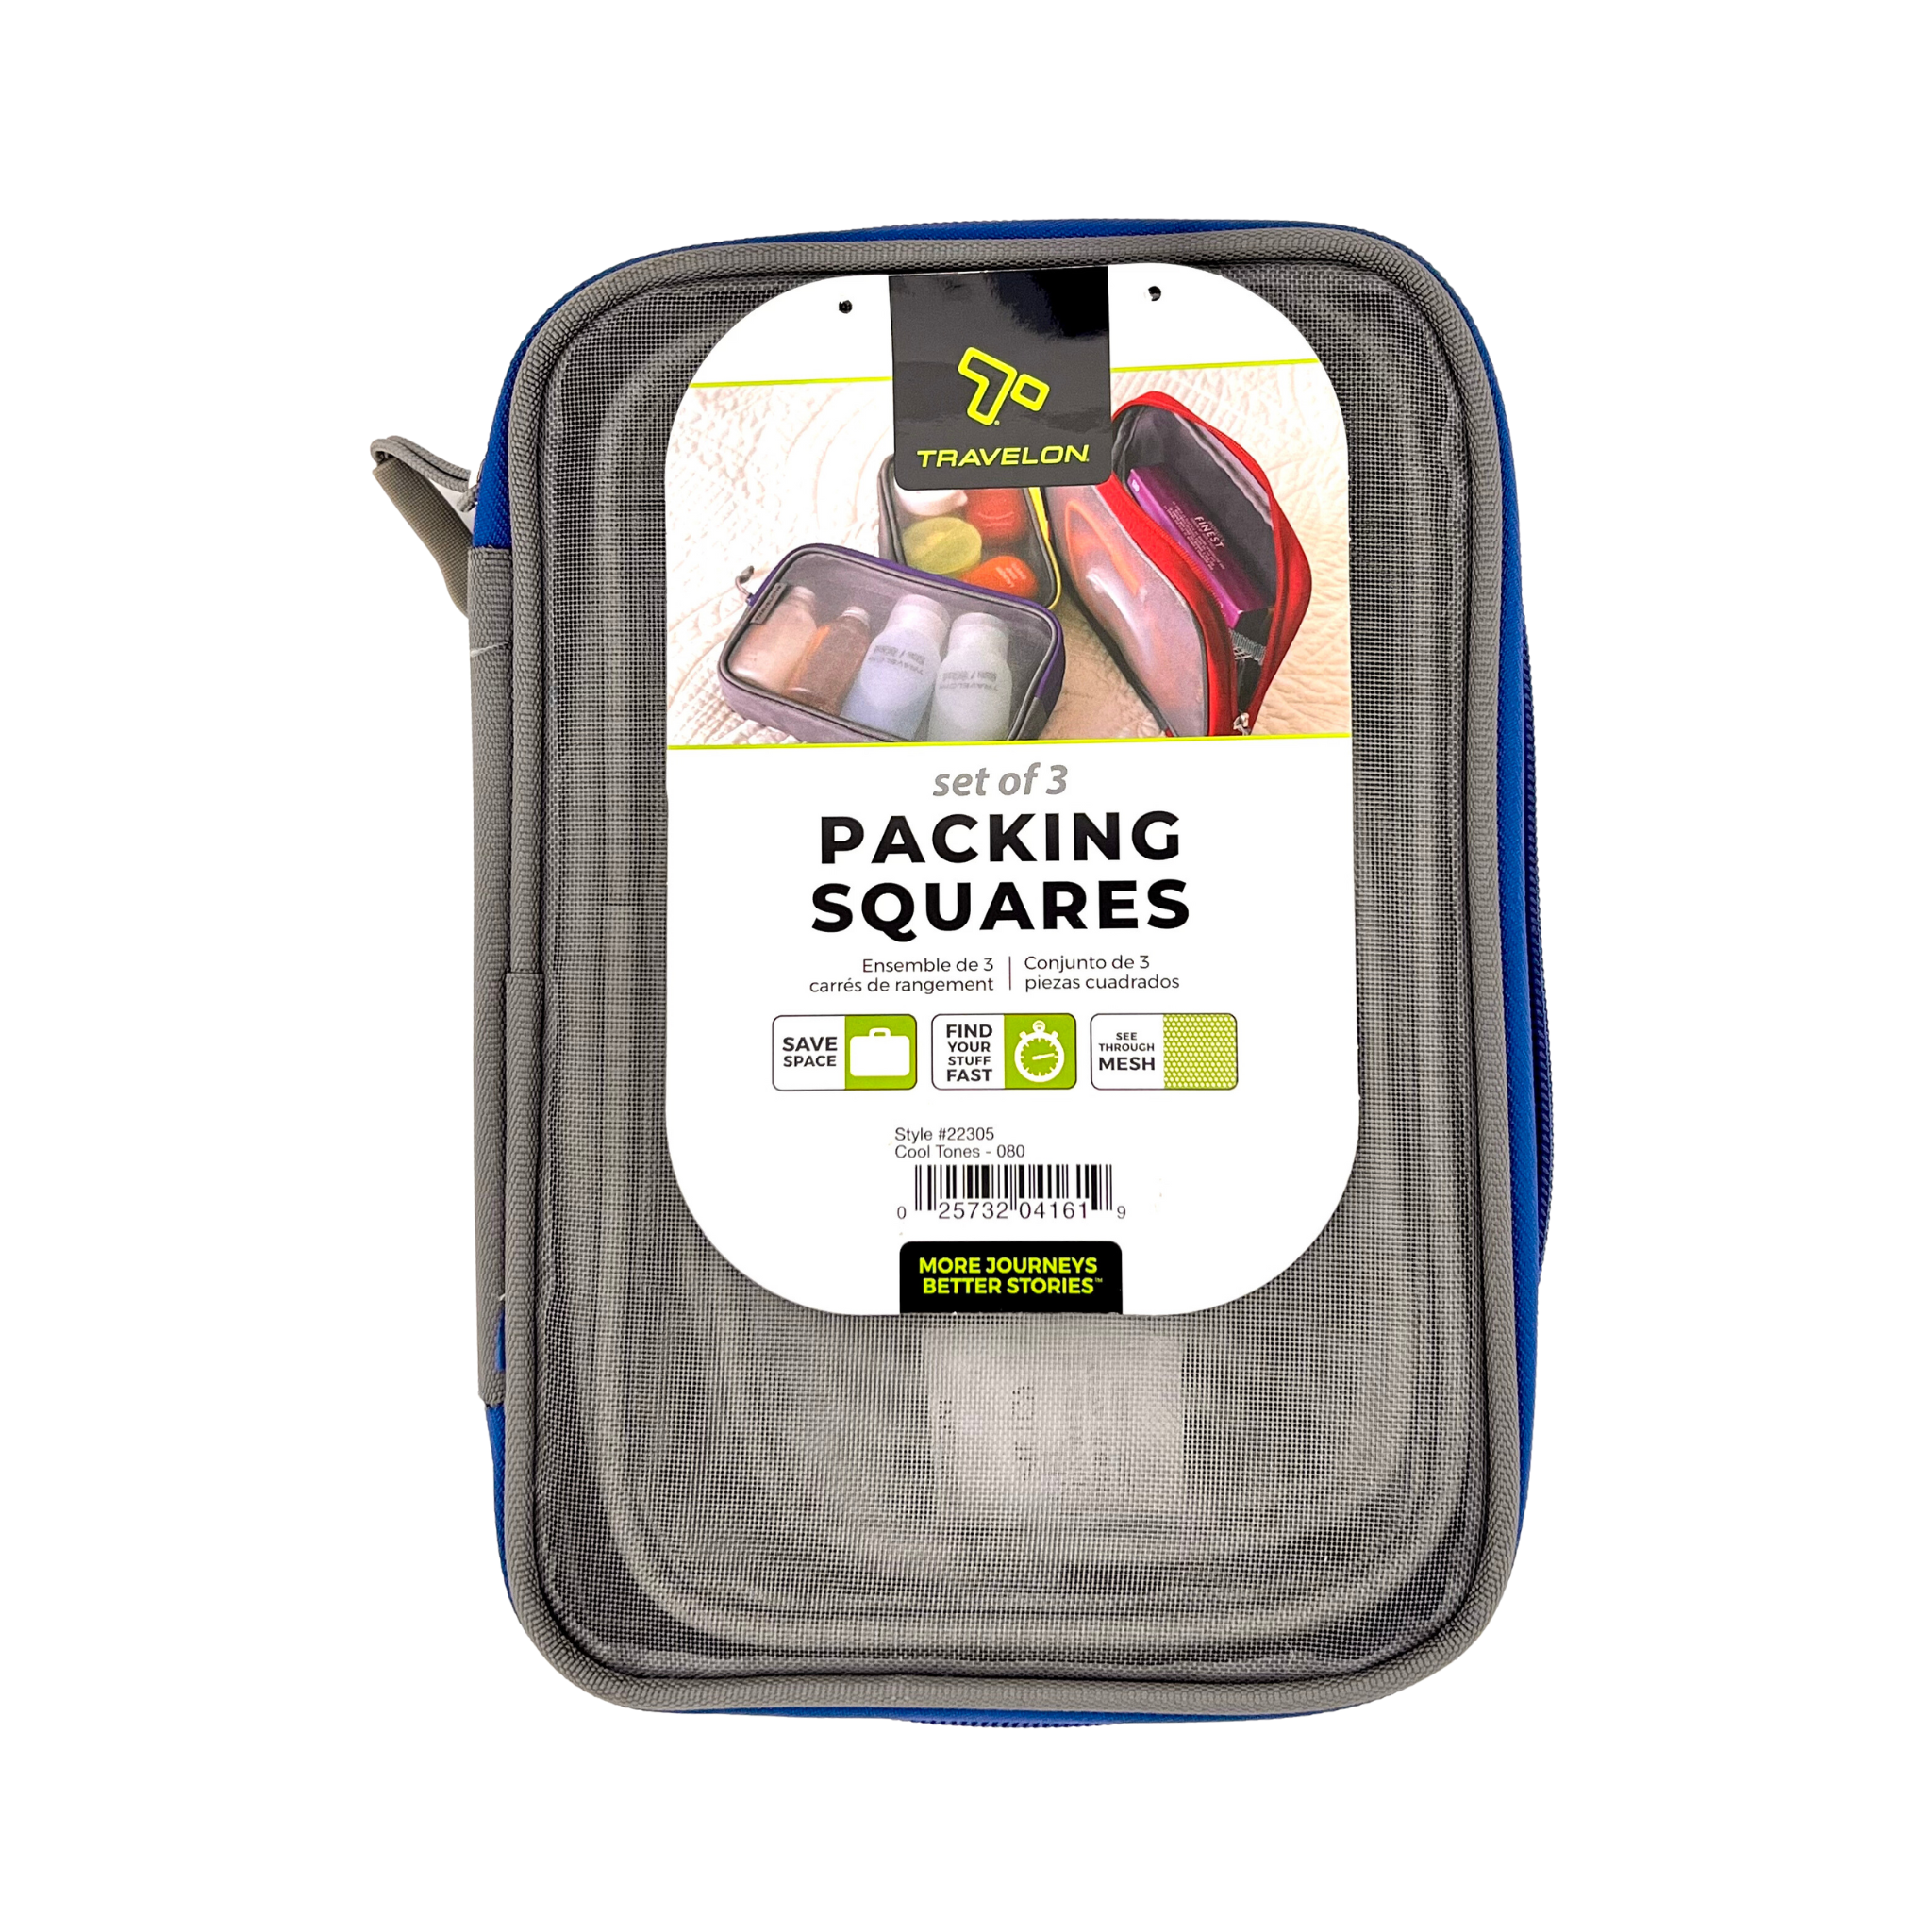 Ziploc Freezer Quart 54pc Seal Top Storage Bags